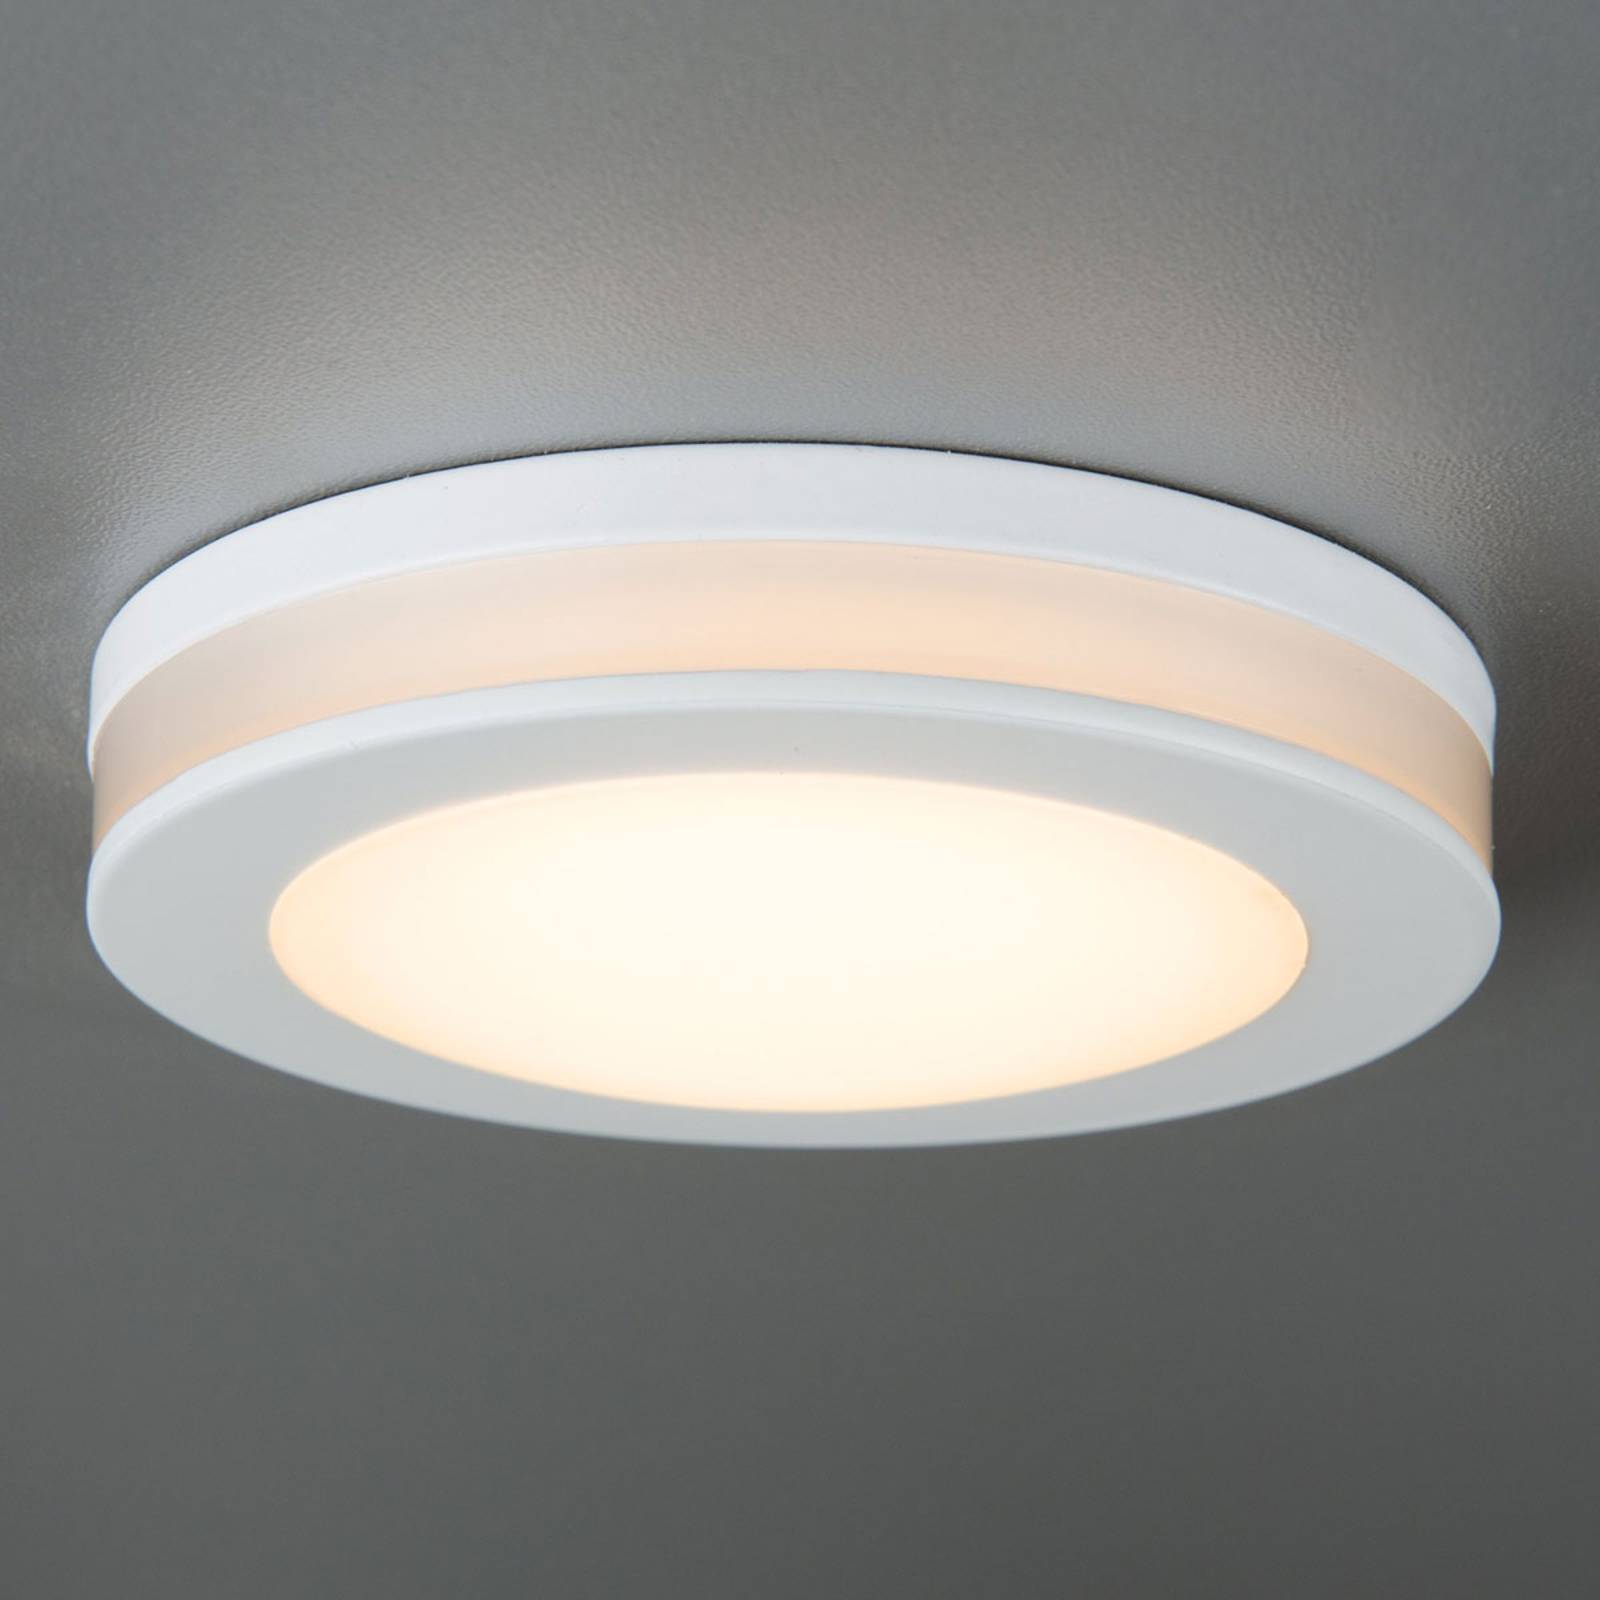 LED-Einbaustrahler Artemis 10 W weiß